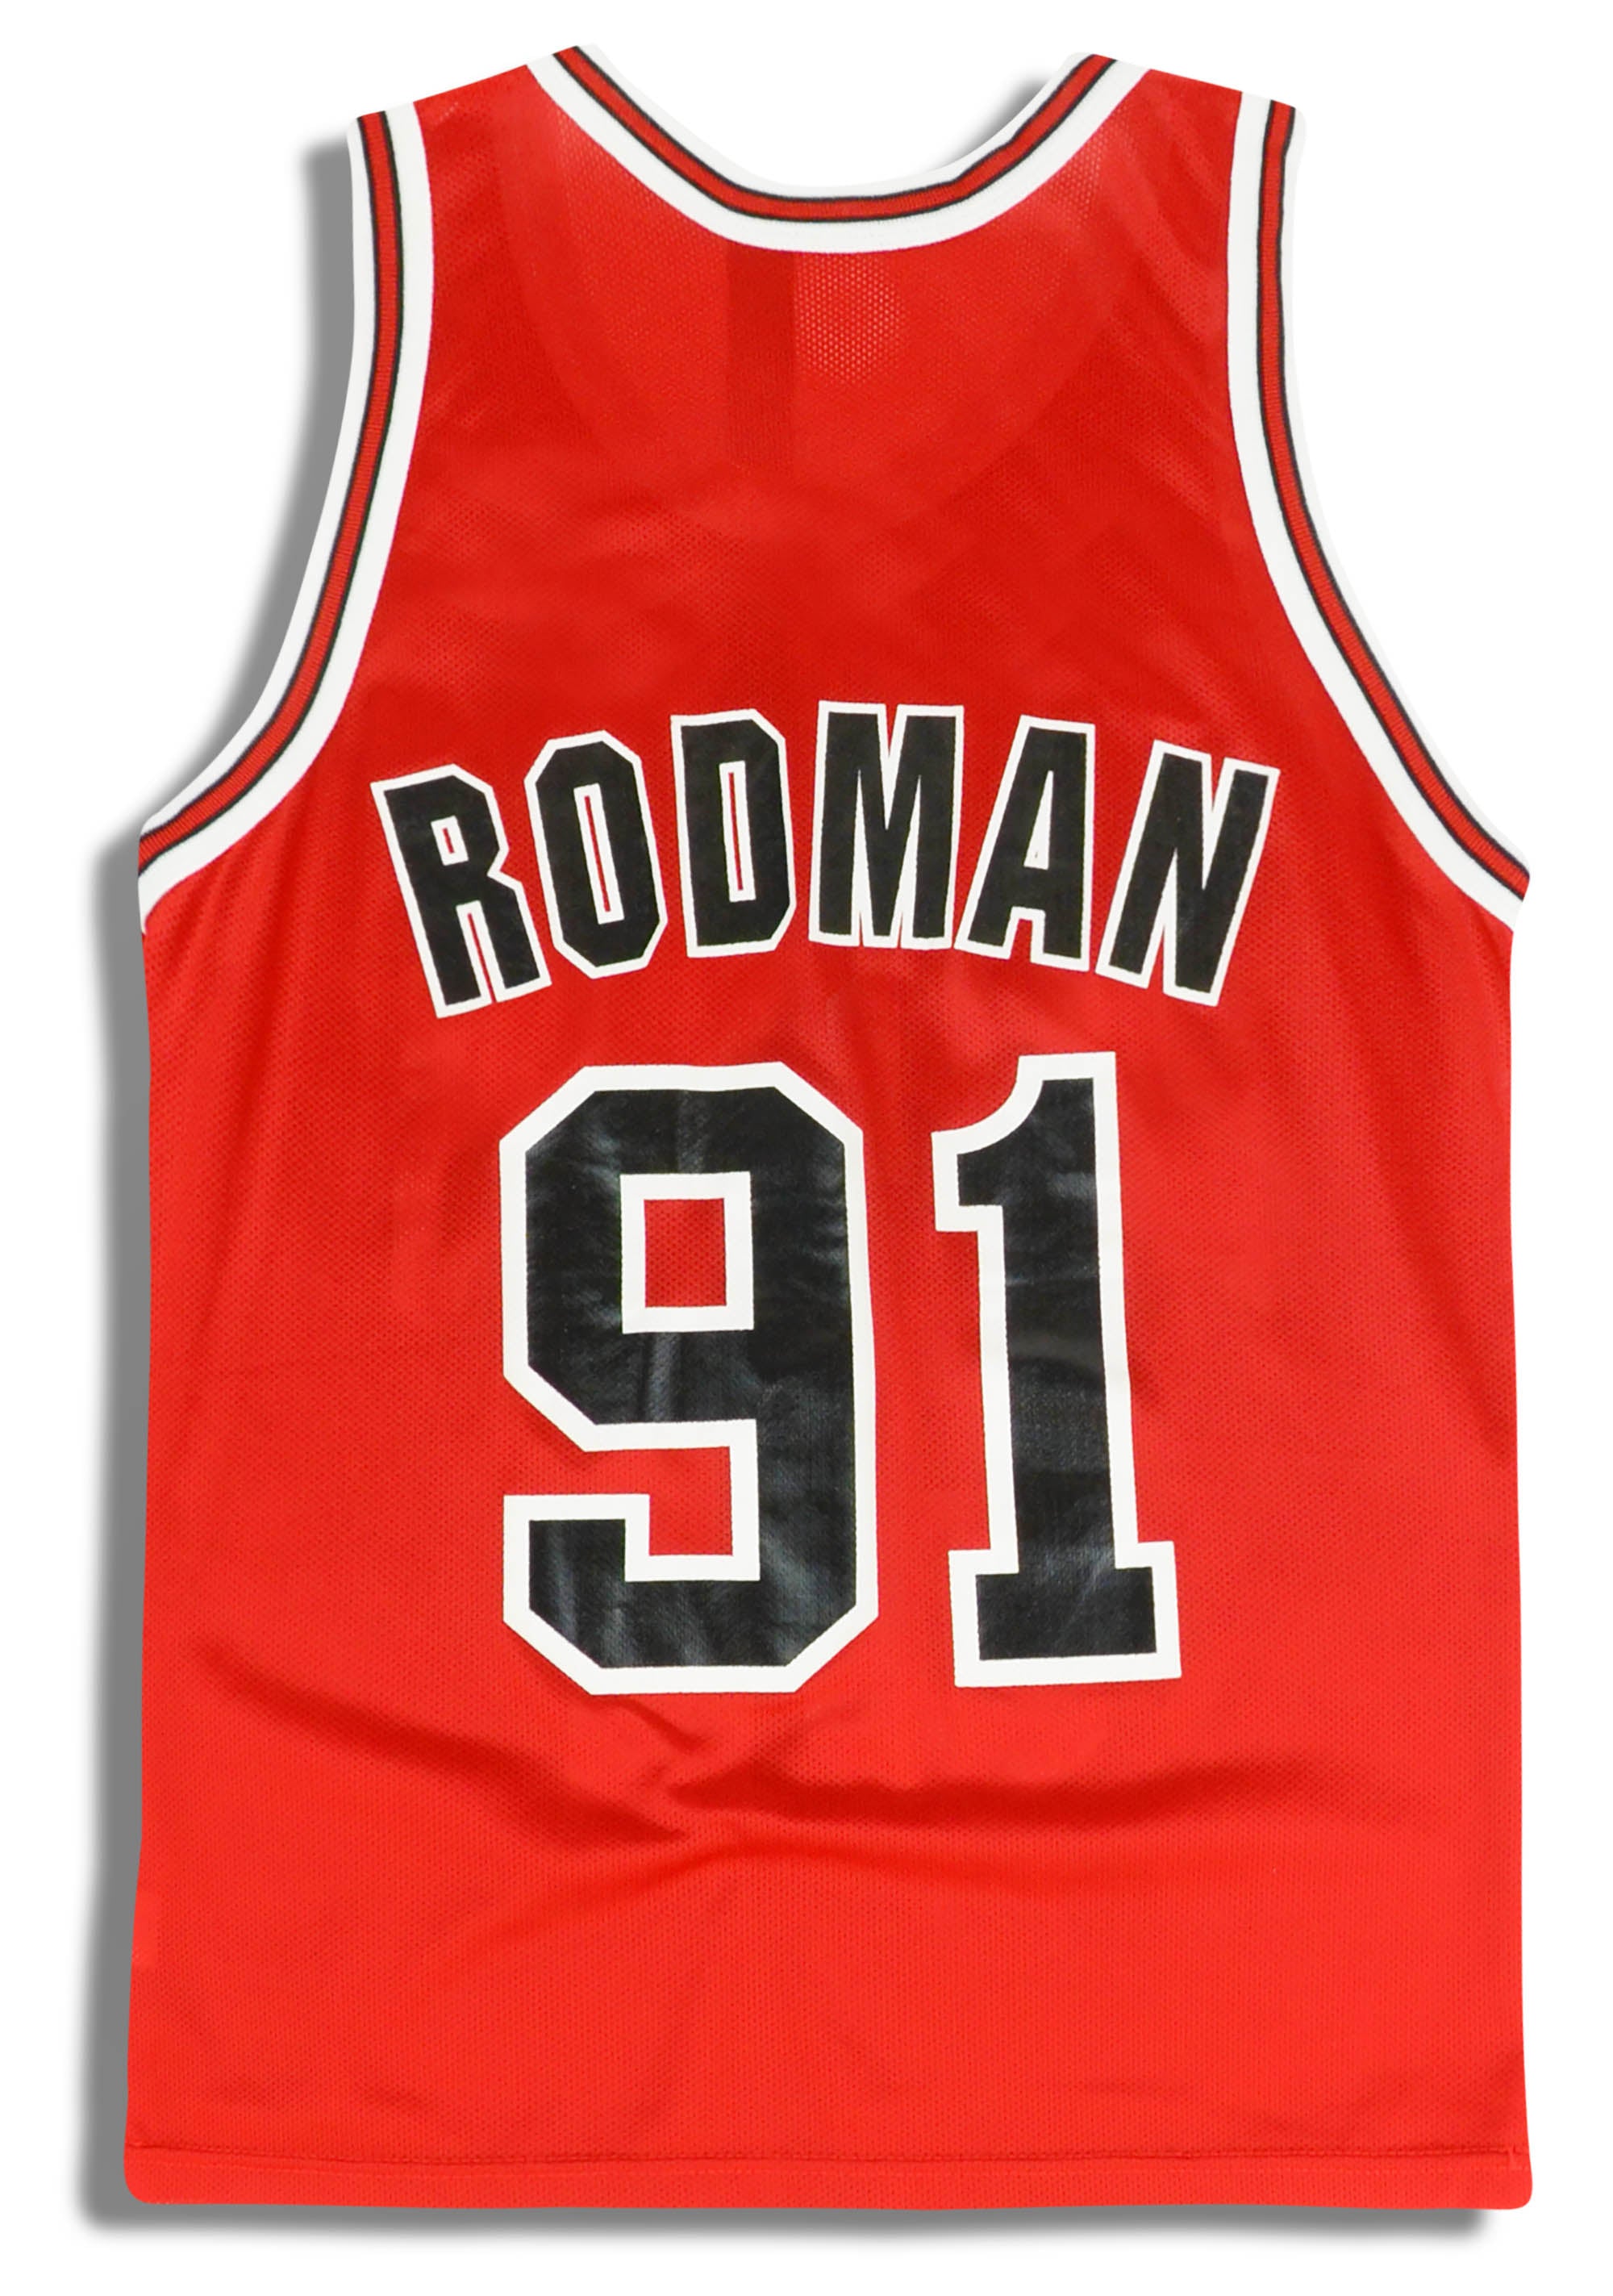 1995-98 CHICAGO BULLS RODMAN #91 CHAMPION JERSEY (AWAY) XL